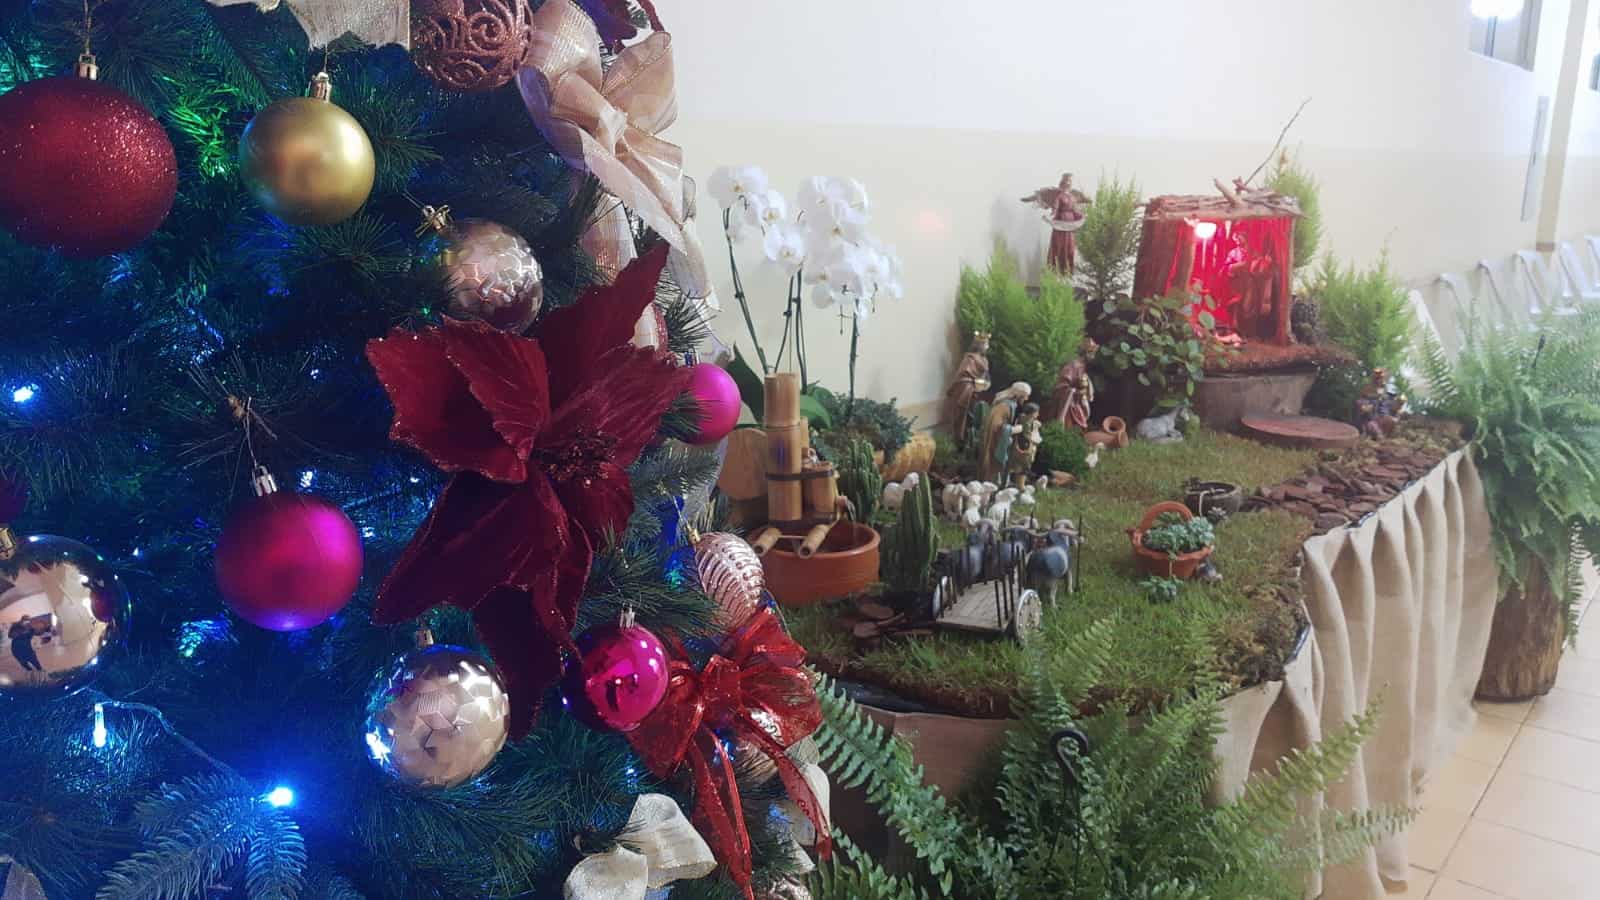 UniSALESIANO prepara seu ambiente para festas natalícias